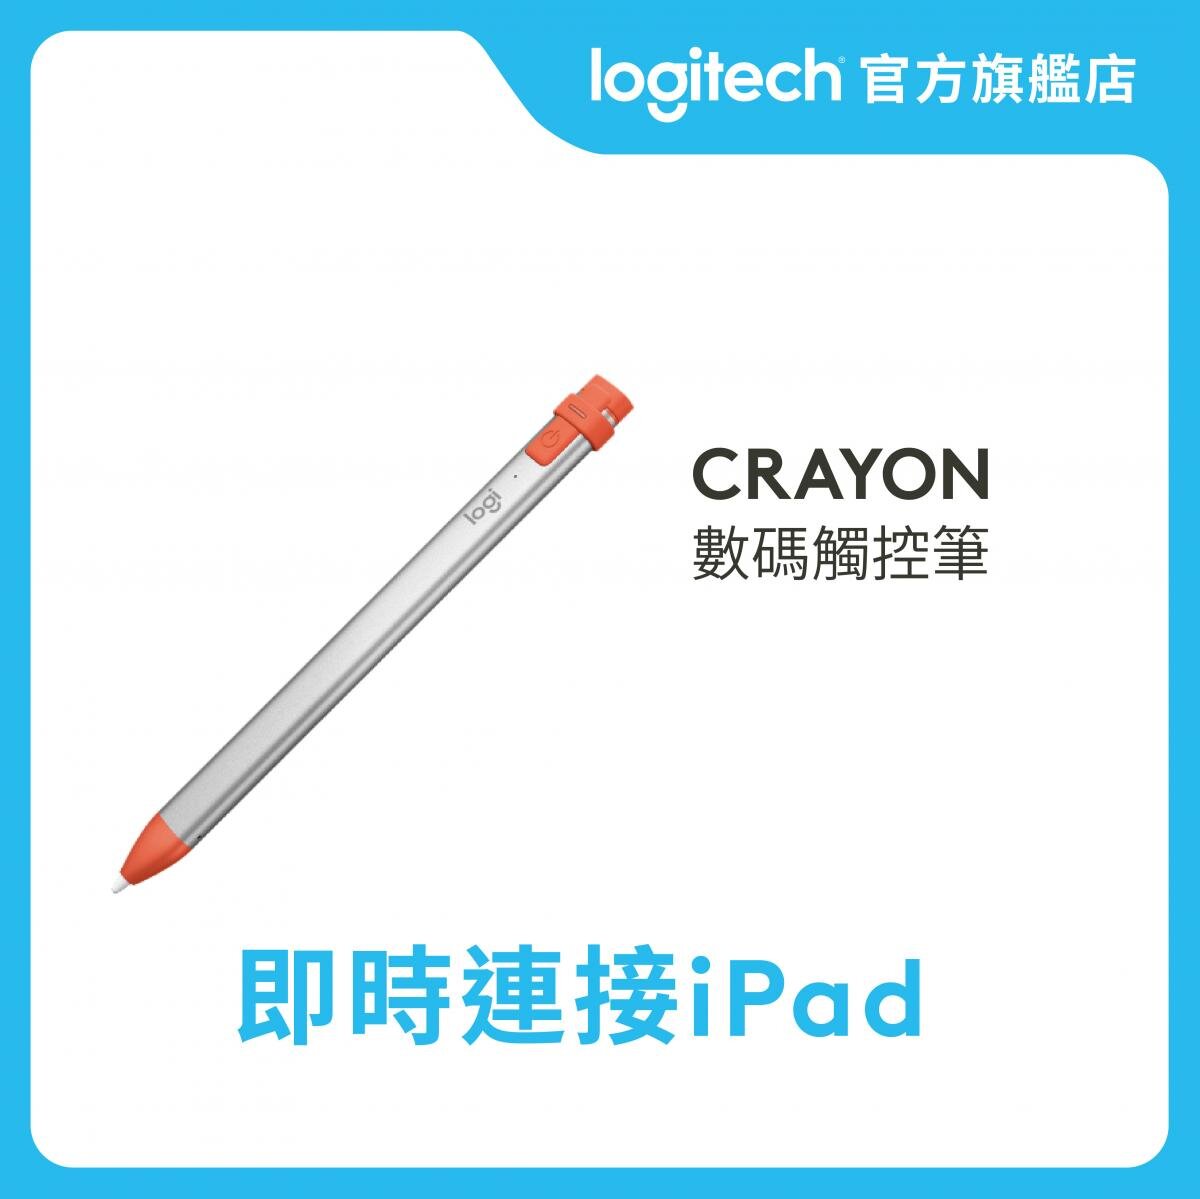 Crayon Digital Pen for iPad